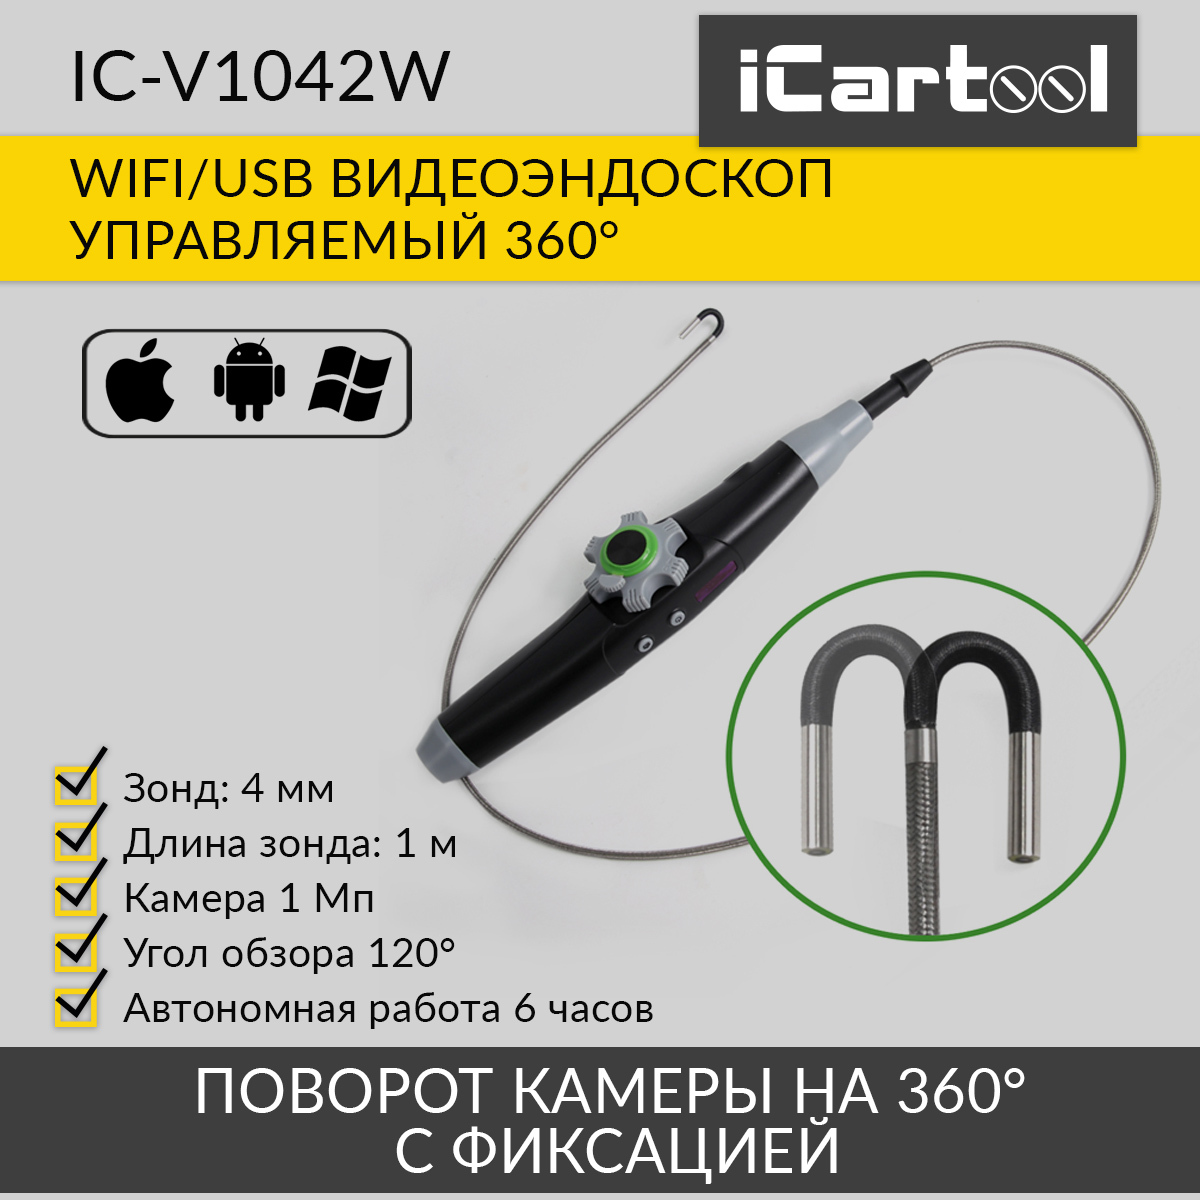 Видеоэндоскоп управляемый iCartool IC-V1042W WIFI/USB, 1Мп, 1168х720, 1м, 4мм зонд, 360° видеоэндоскоп thinkcar